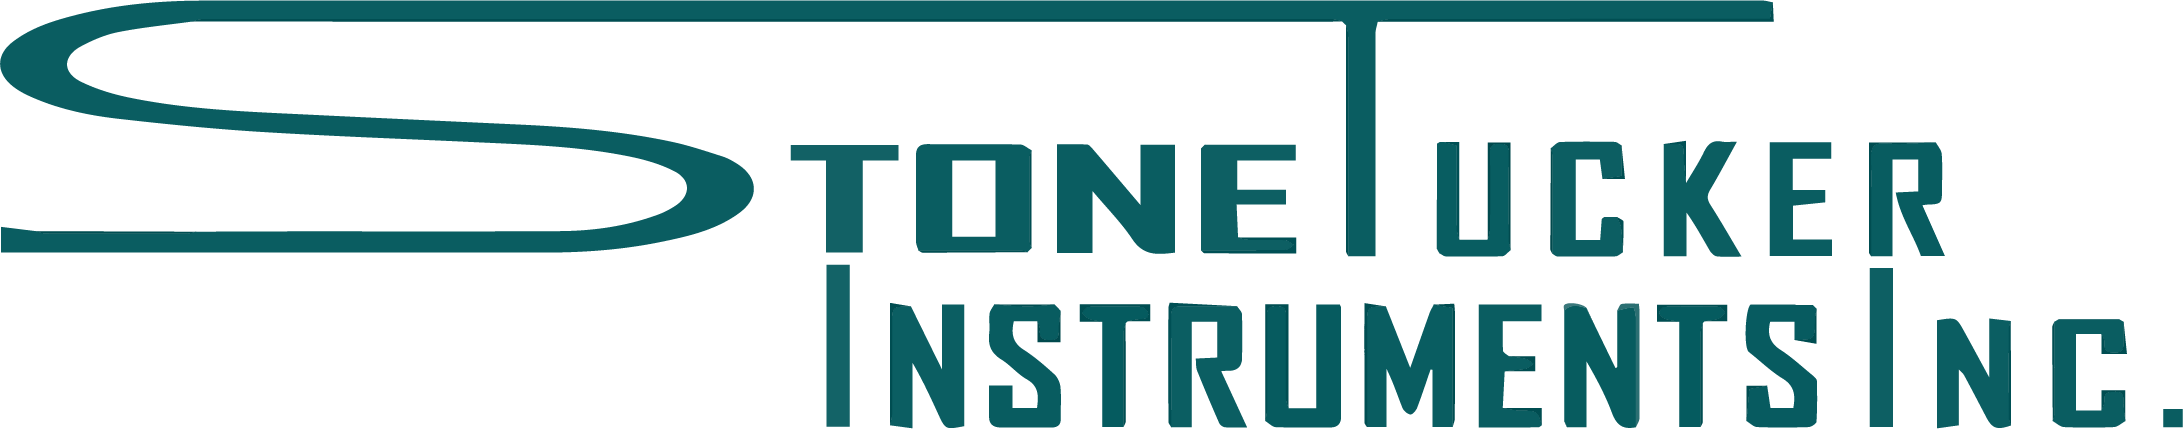 Stone Tucker Instruments Inc. logo